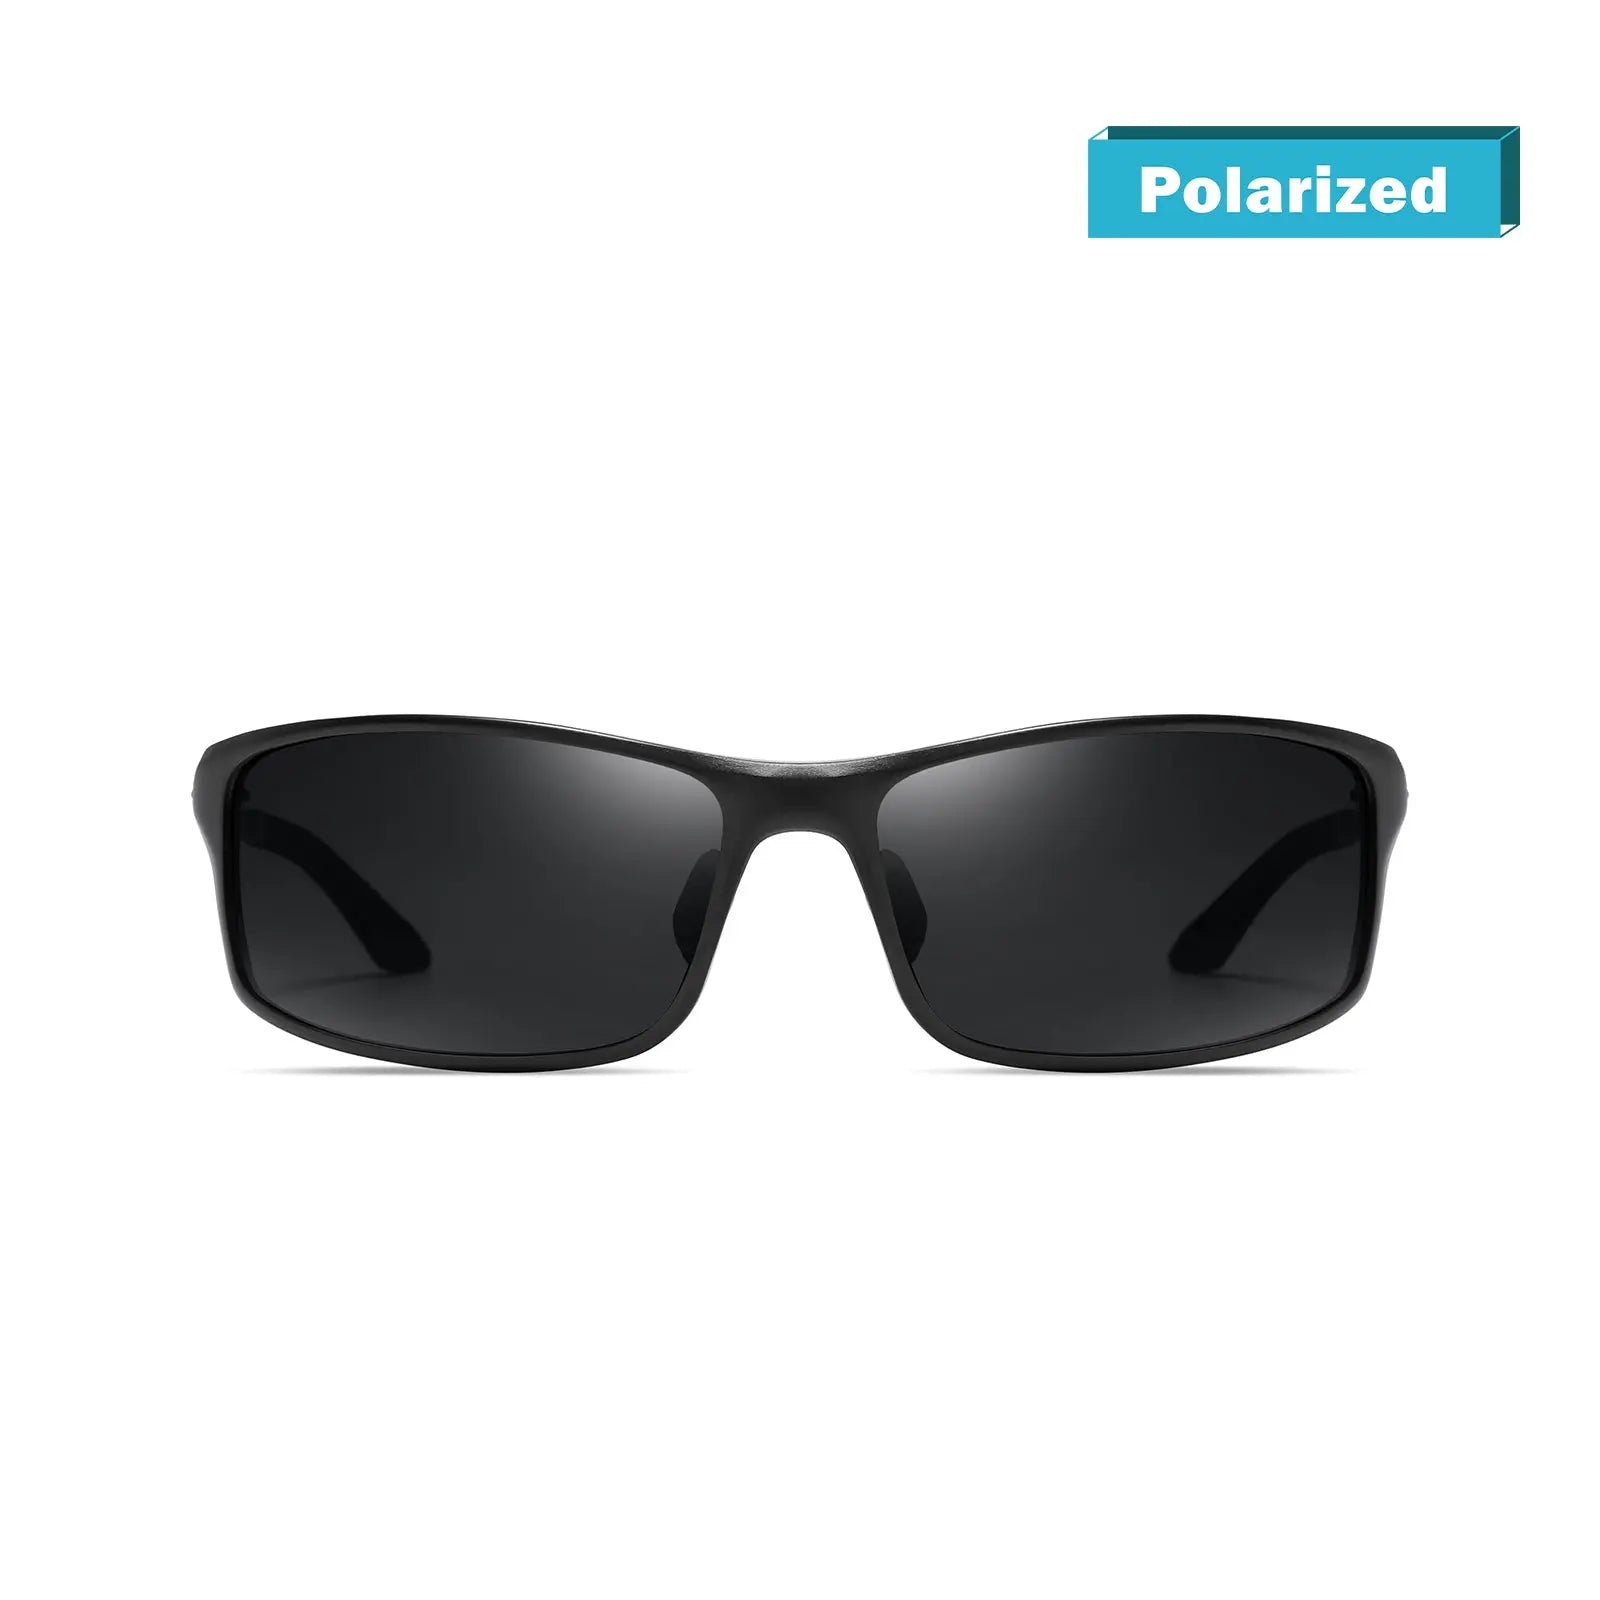 SOXICK Polarized Sports Sunglasses for Men Women Fashion Sunglasses for Fishing Driving Sunglasses 100% UV Protection 